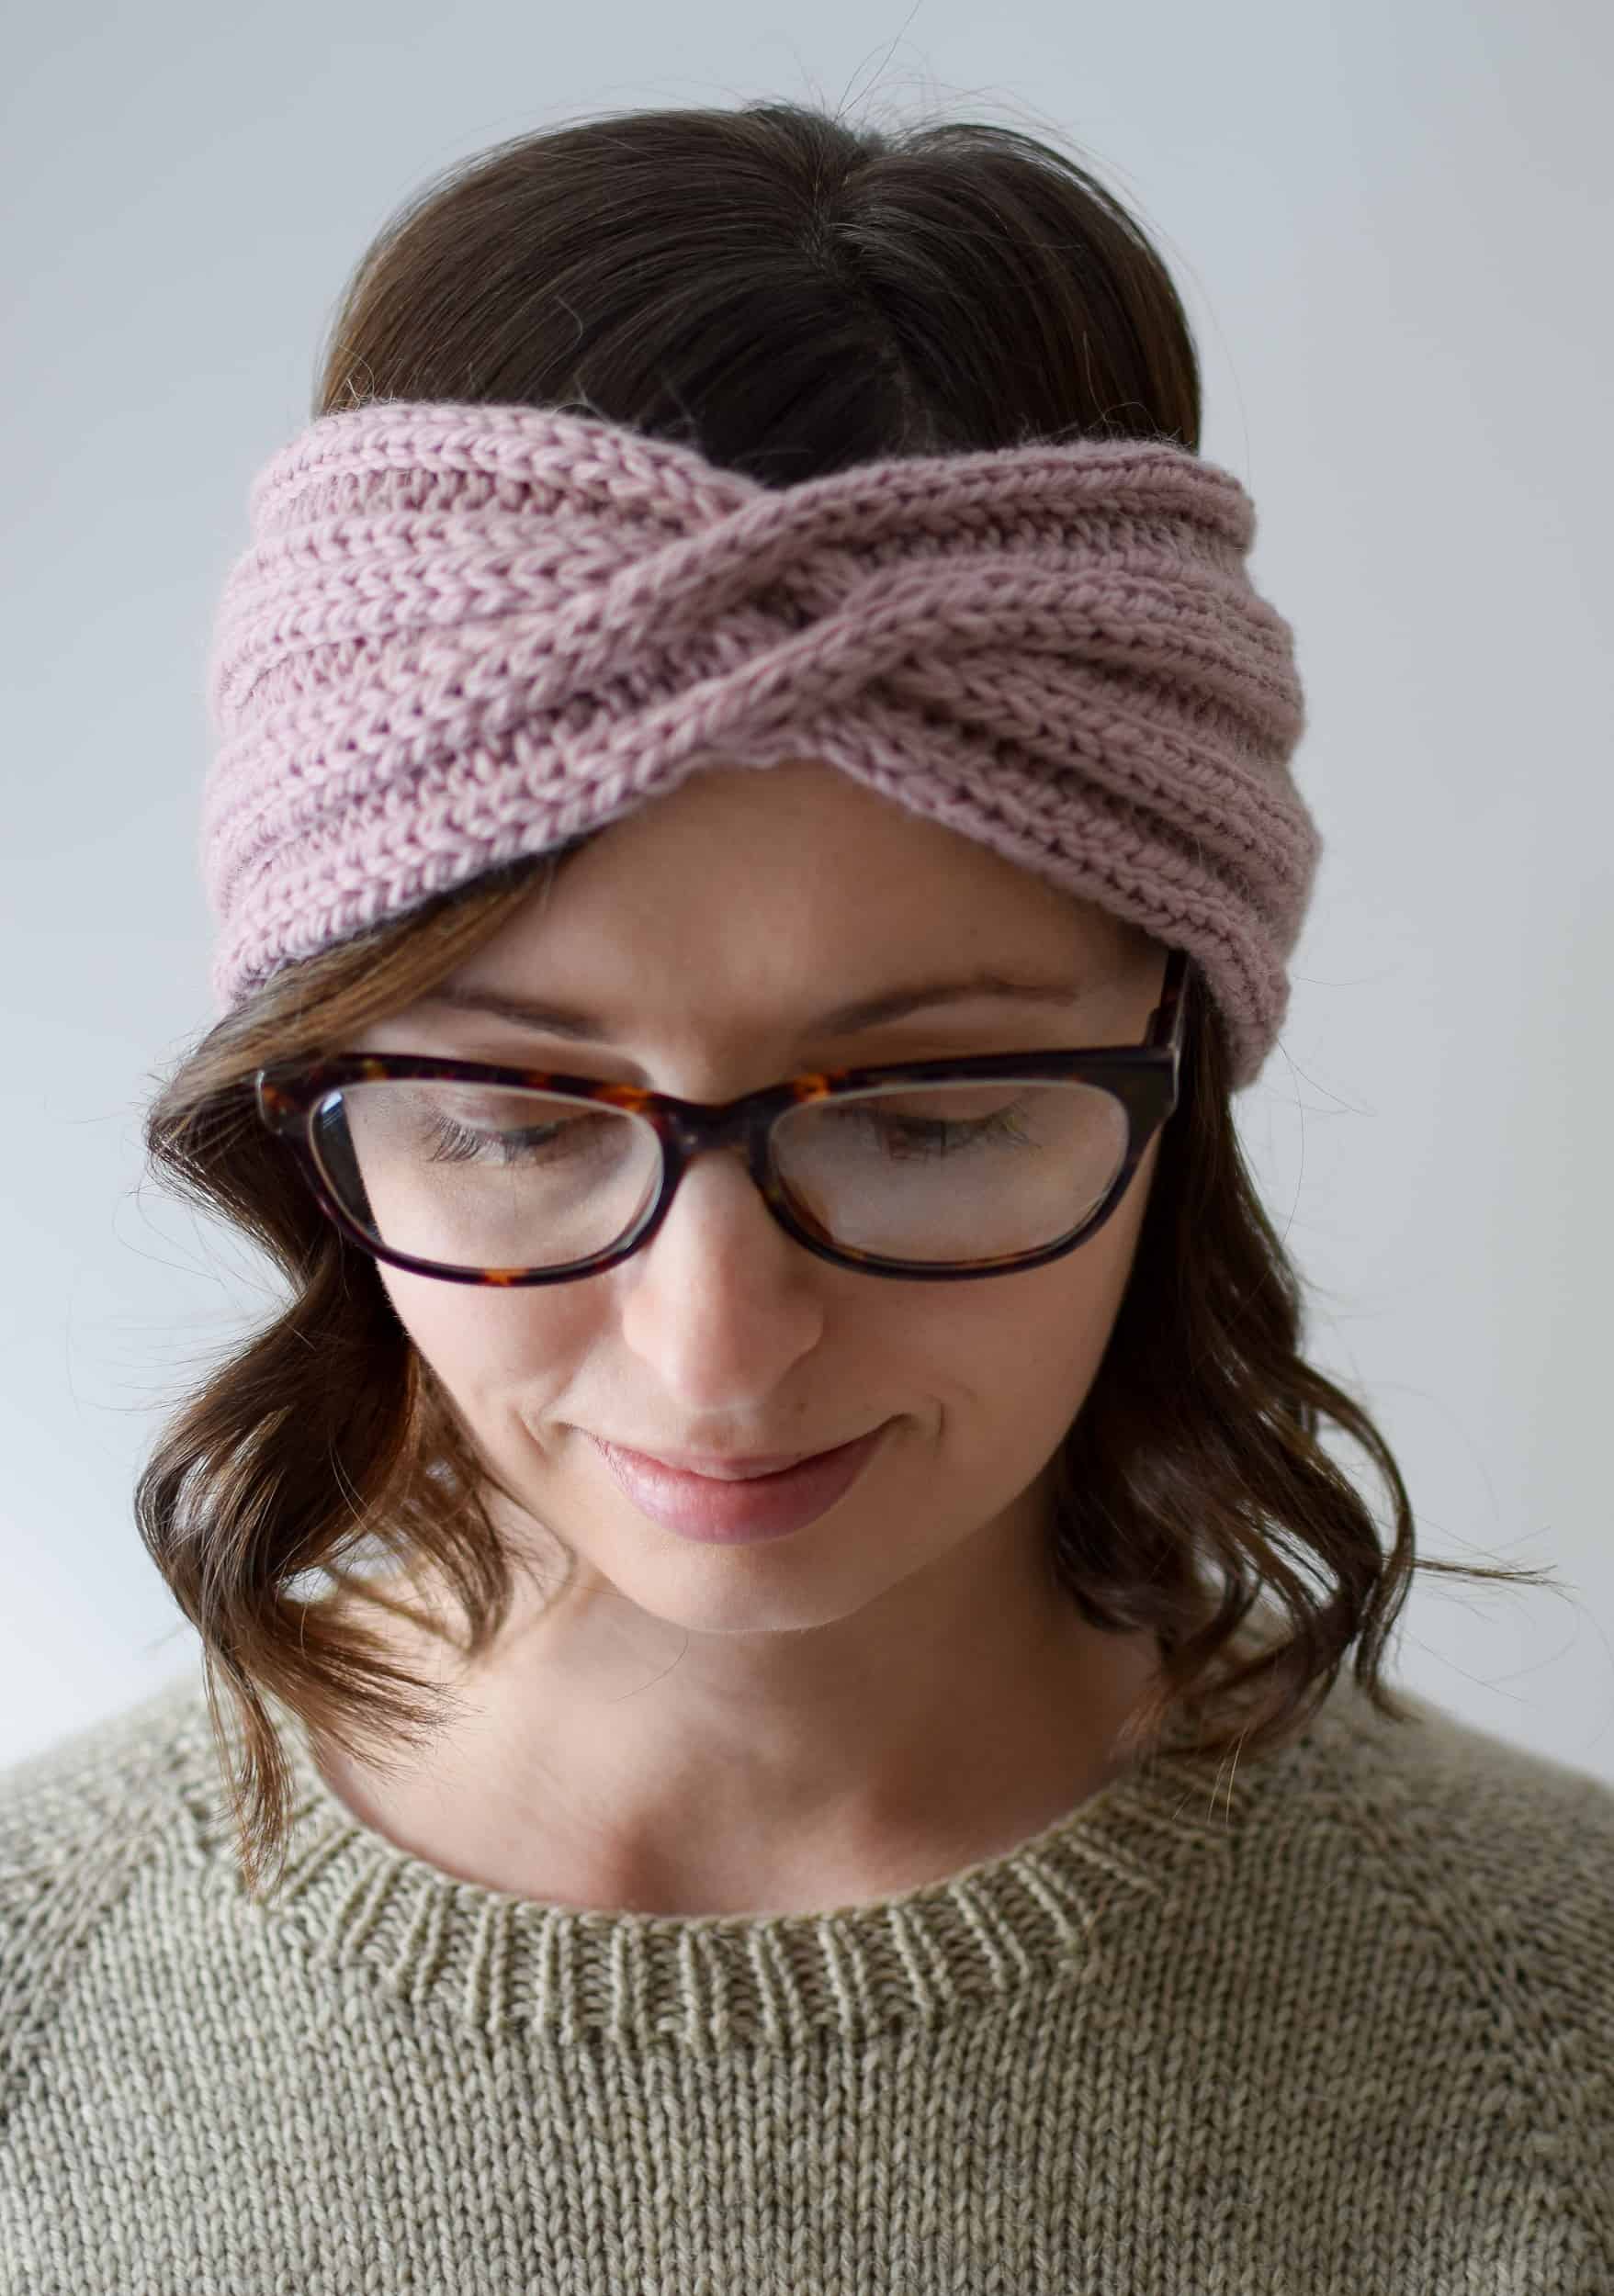 wide knitted headband pattern